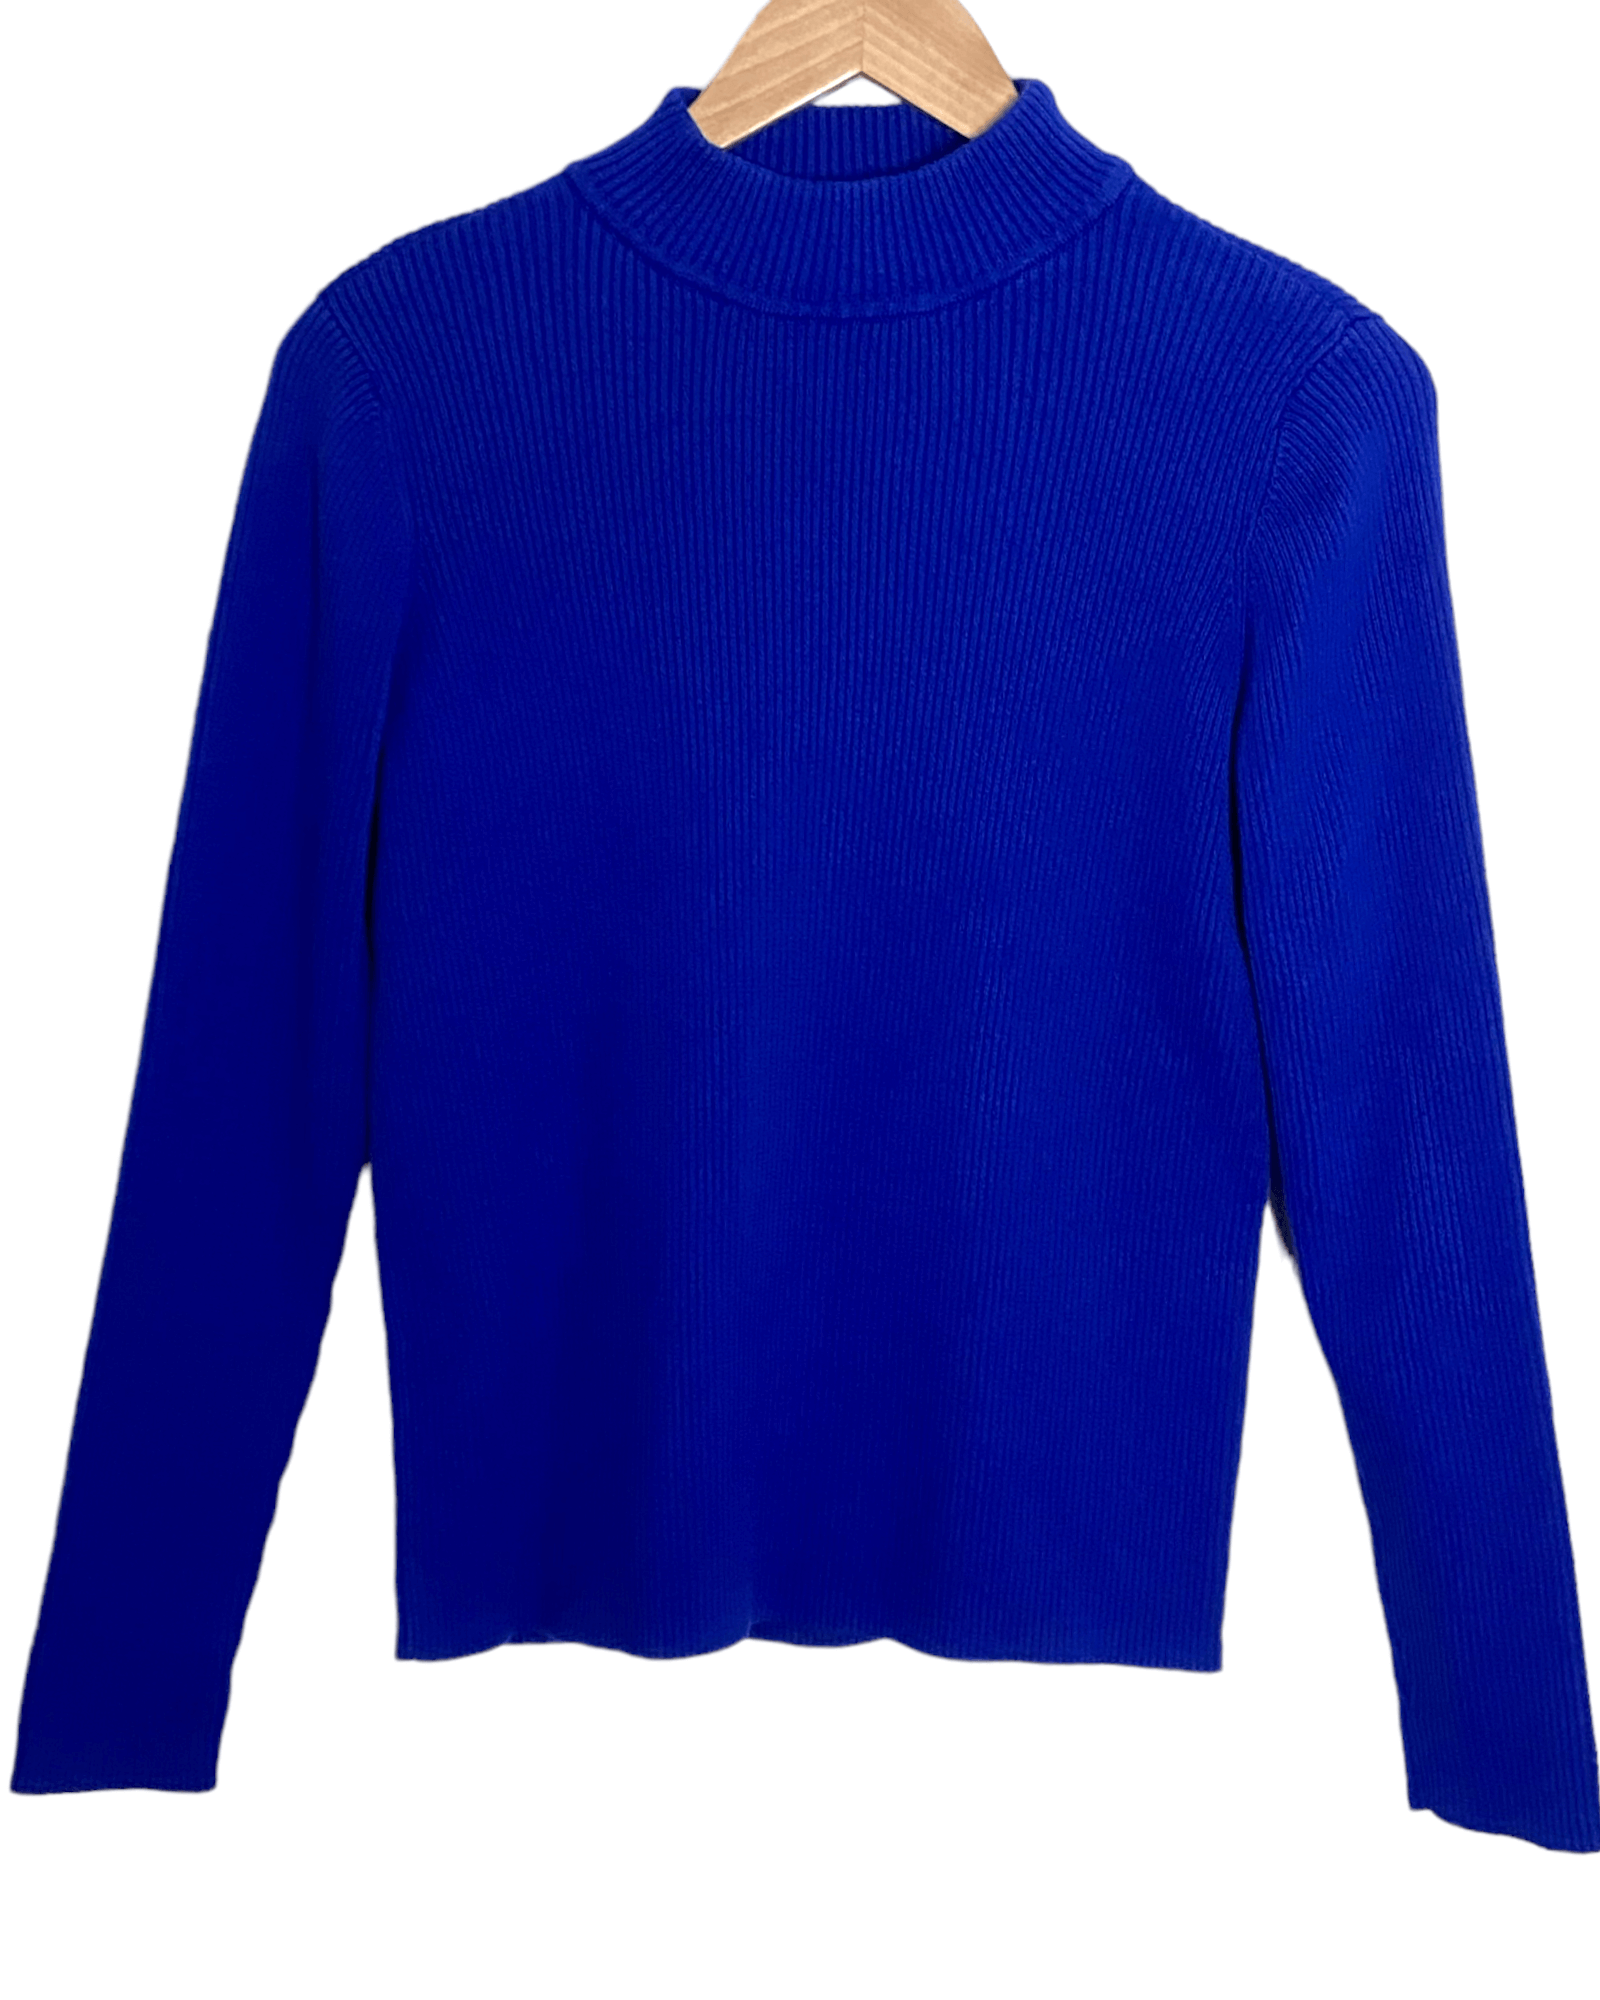 Bright Winter KAREN SCOTT for MACY'S ribbed mock neck cotton knit sweater blue